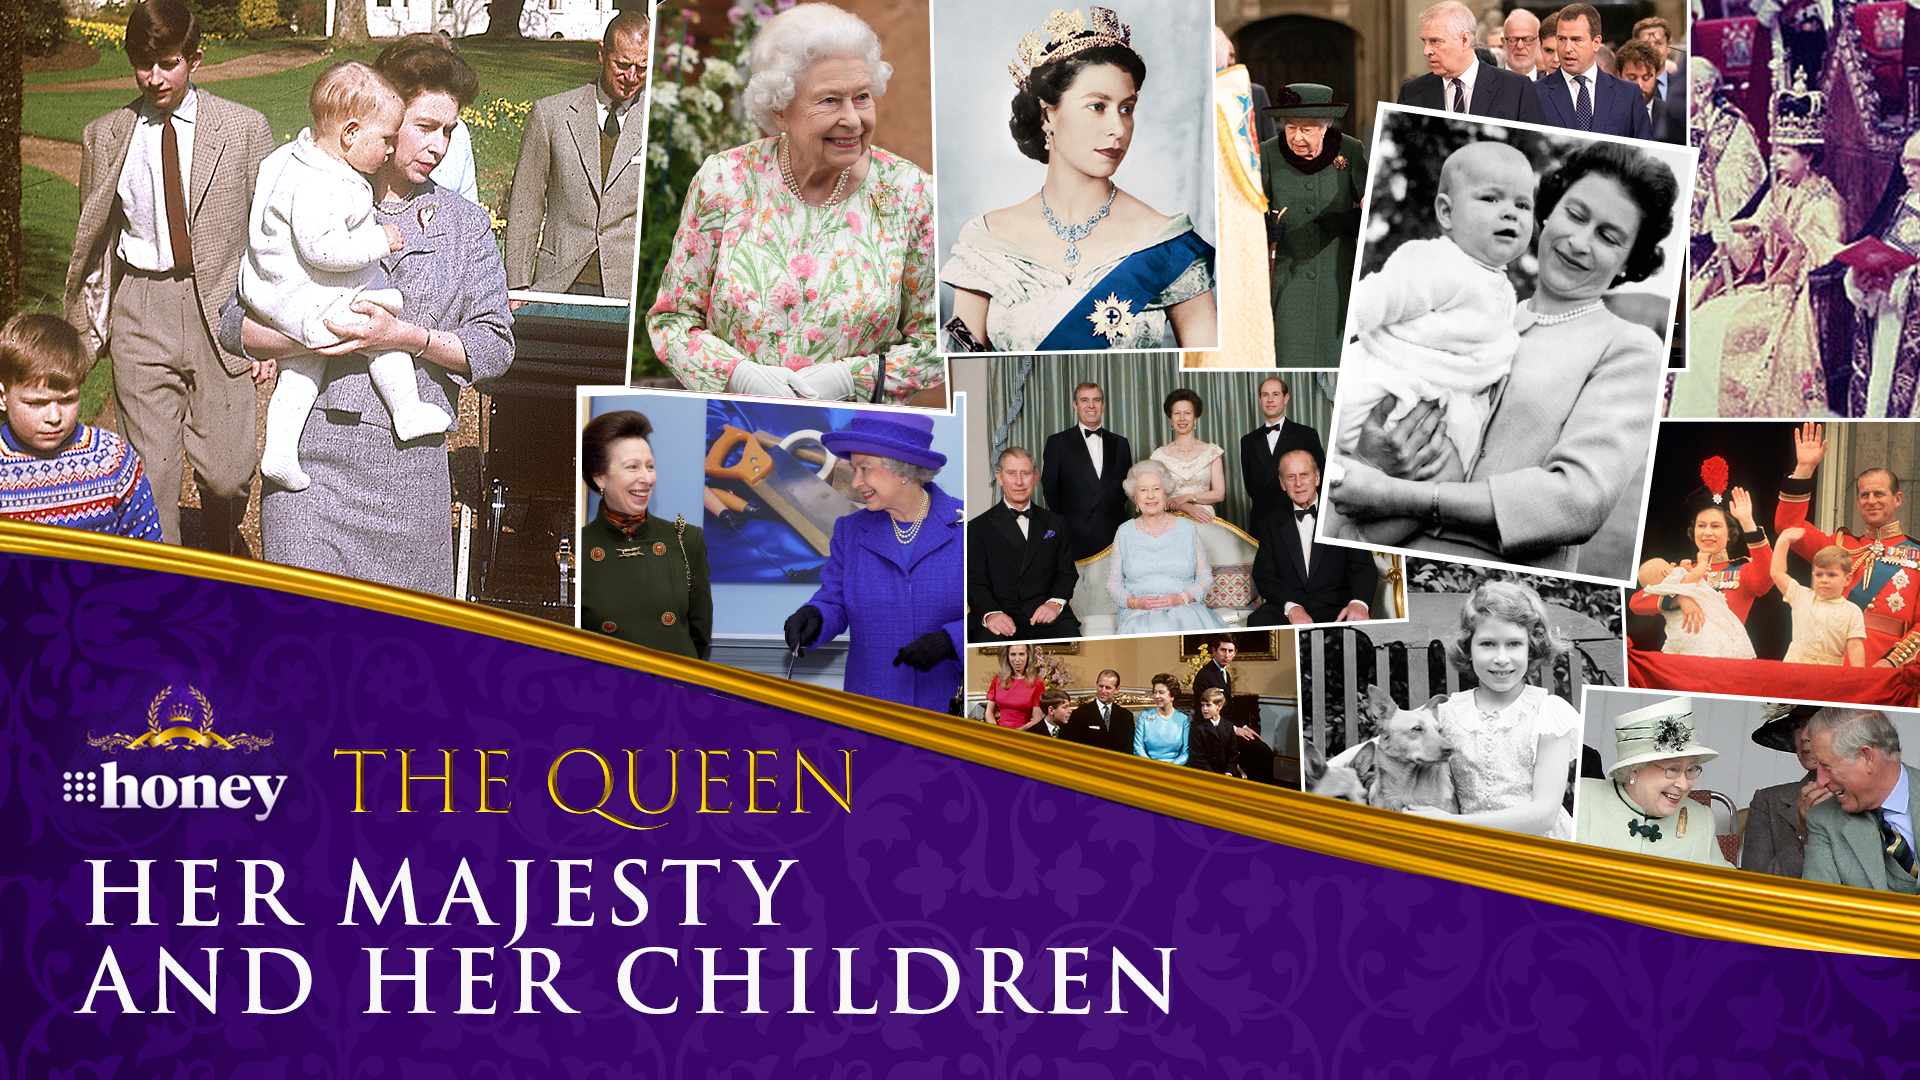 Queen Elizabeth's 'complex' relationship with her children